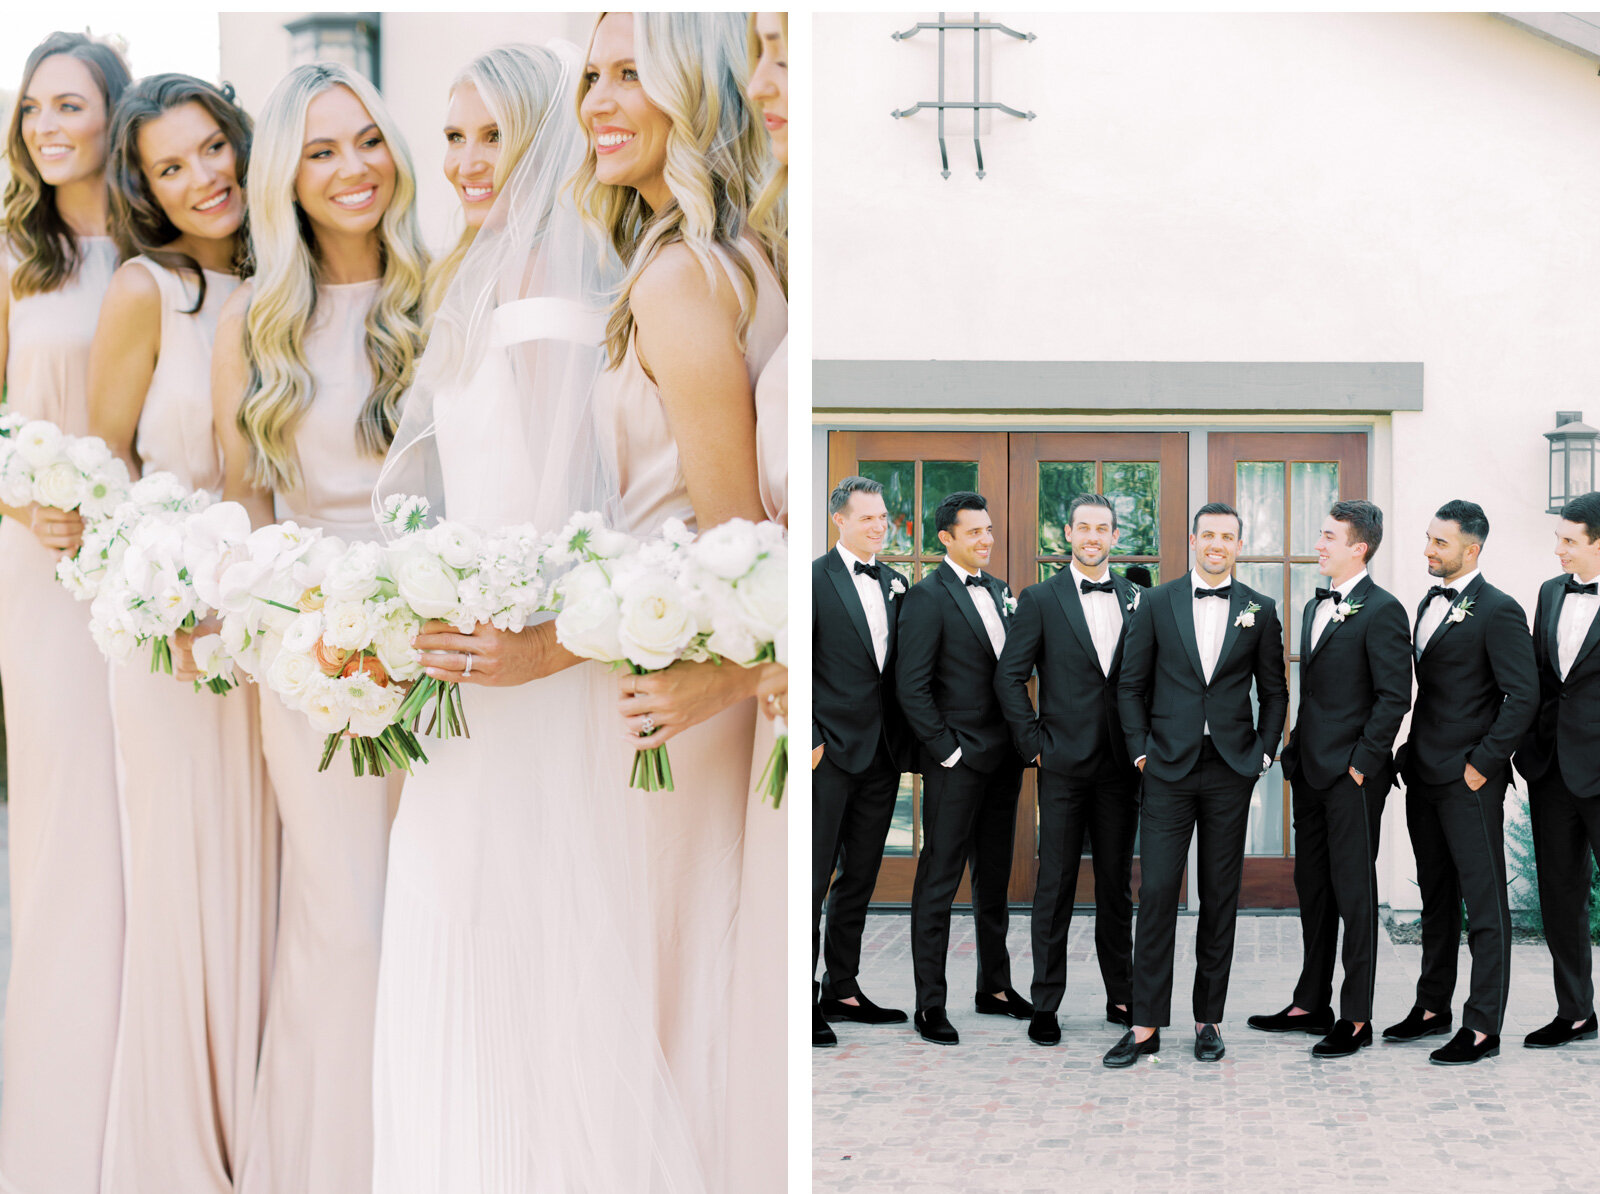 Southern-California-Bride-Orange-County-Weddings-Al-Fresco-Top-Wedding-Photographers-LA-Light-and-Creamy-Pictures-Natalie-Schutt-Photography_07.jpg